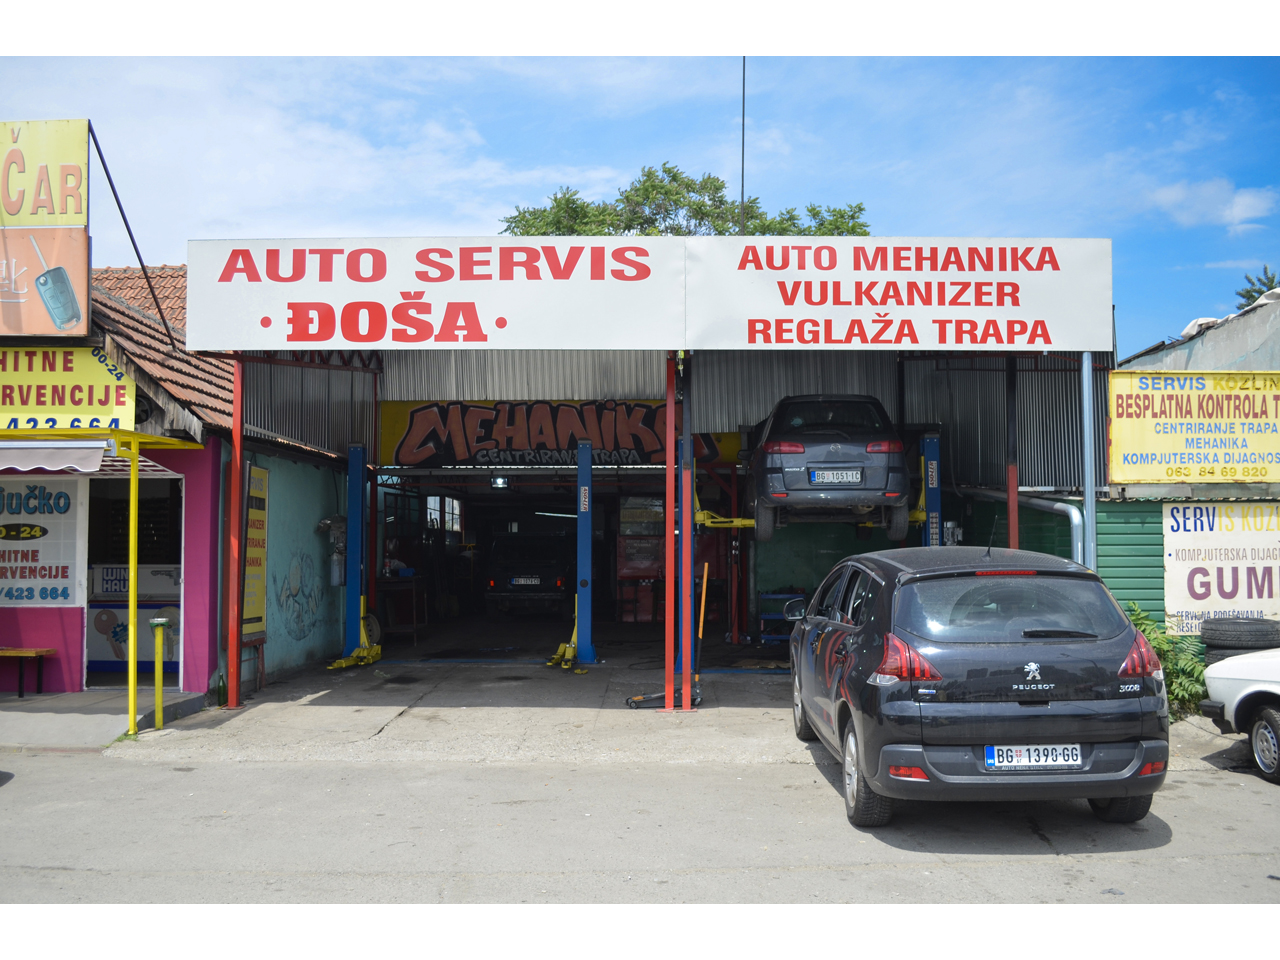 CAR SERVICE DJOSA Car service Belgrade - Photo 1